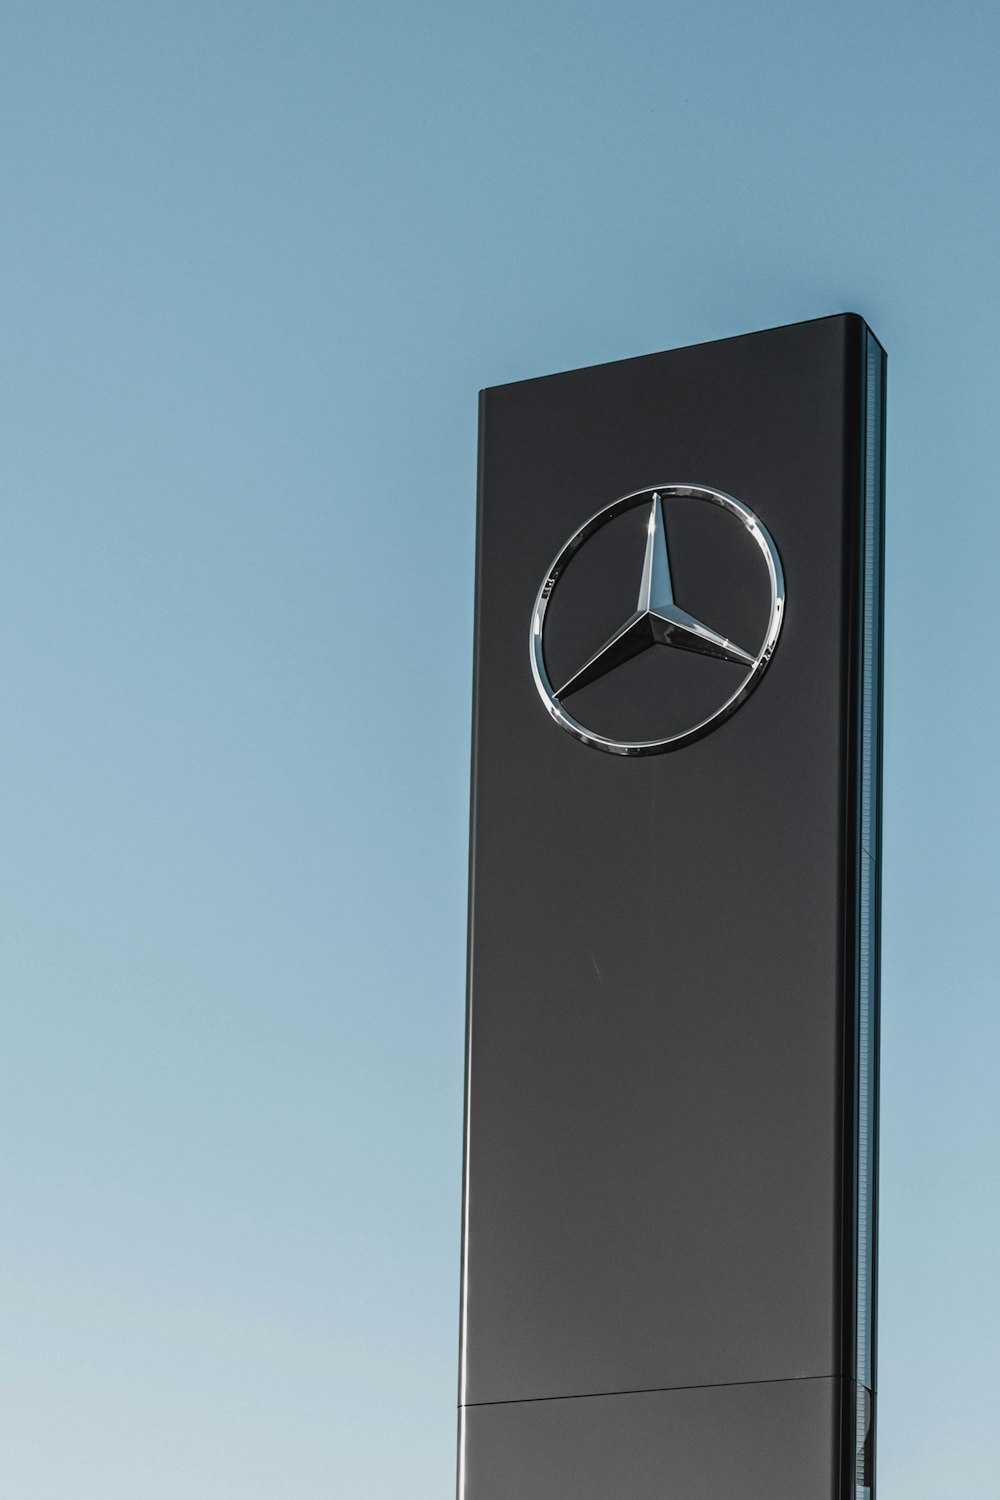 Mercedes-Benz signage under clear blue sky